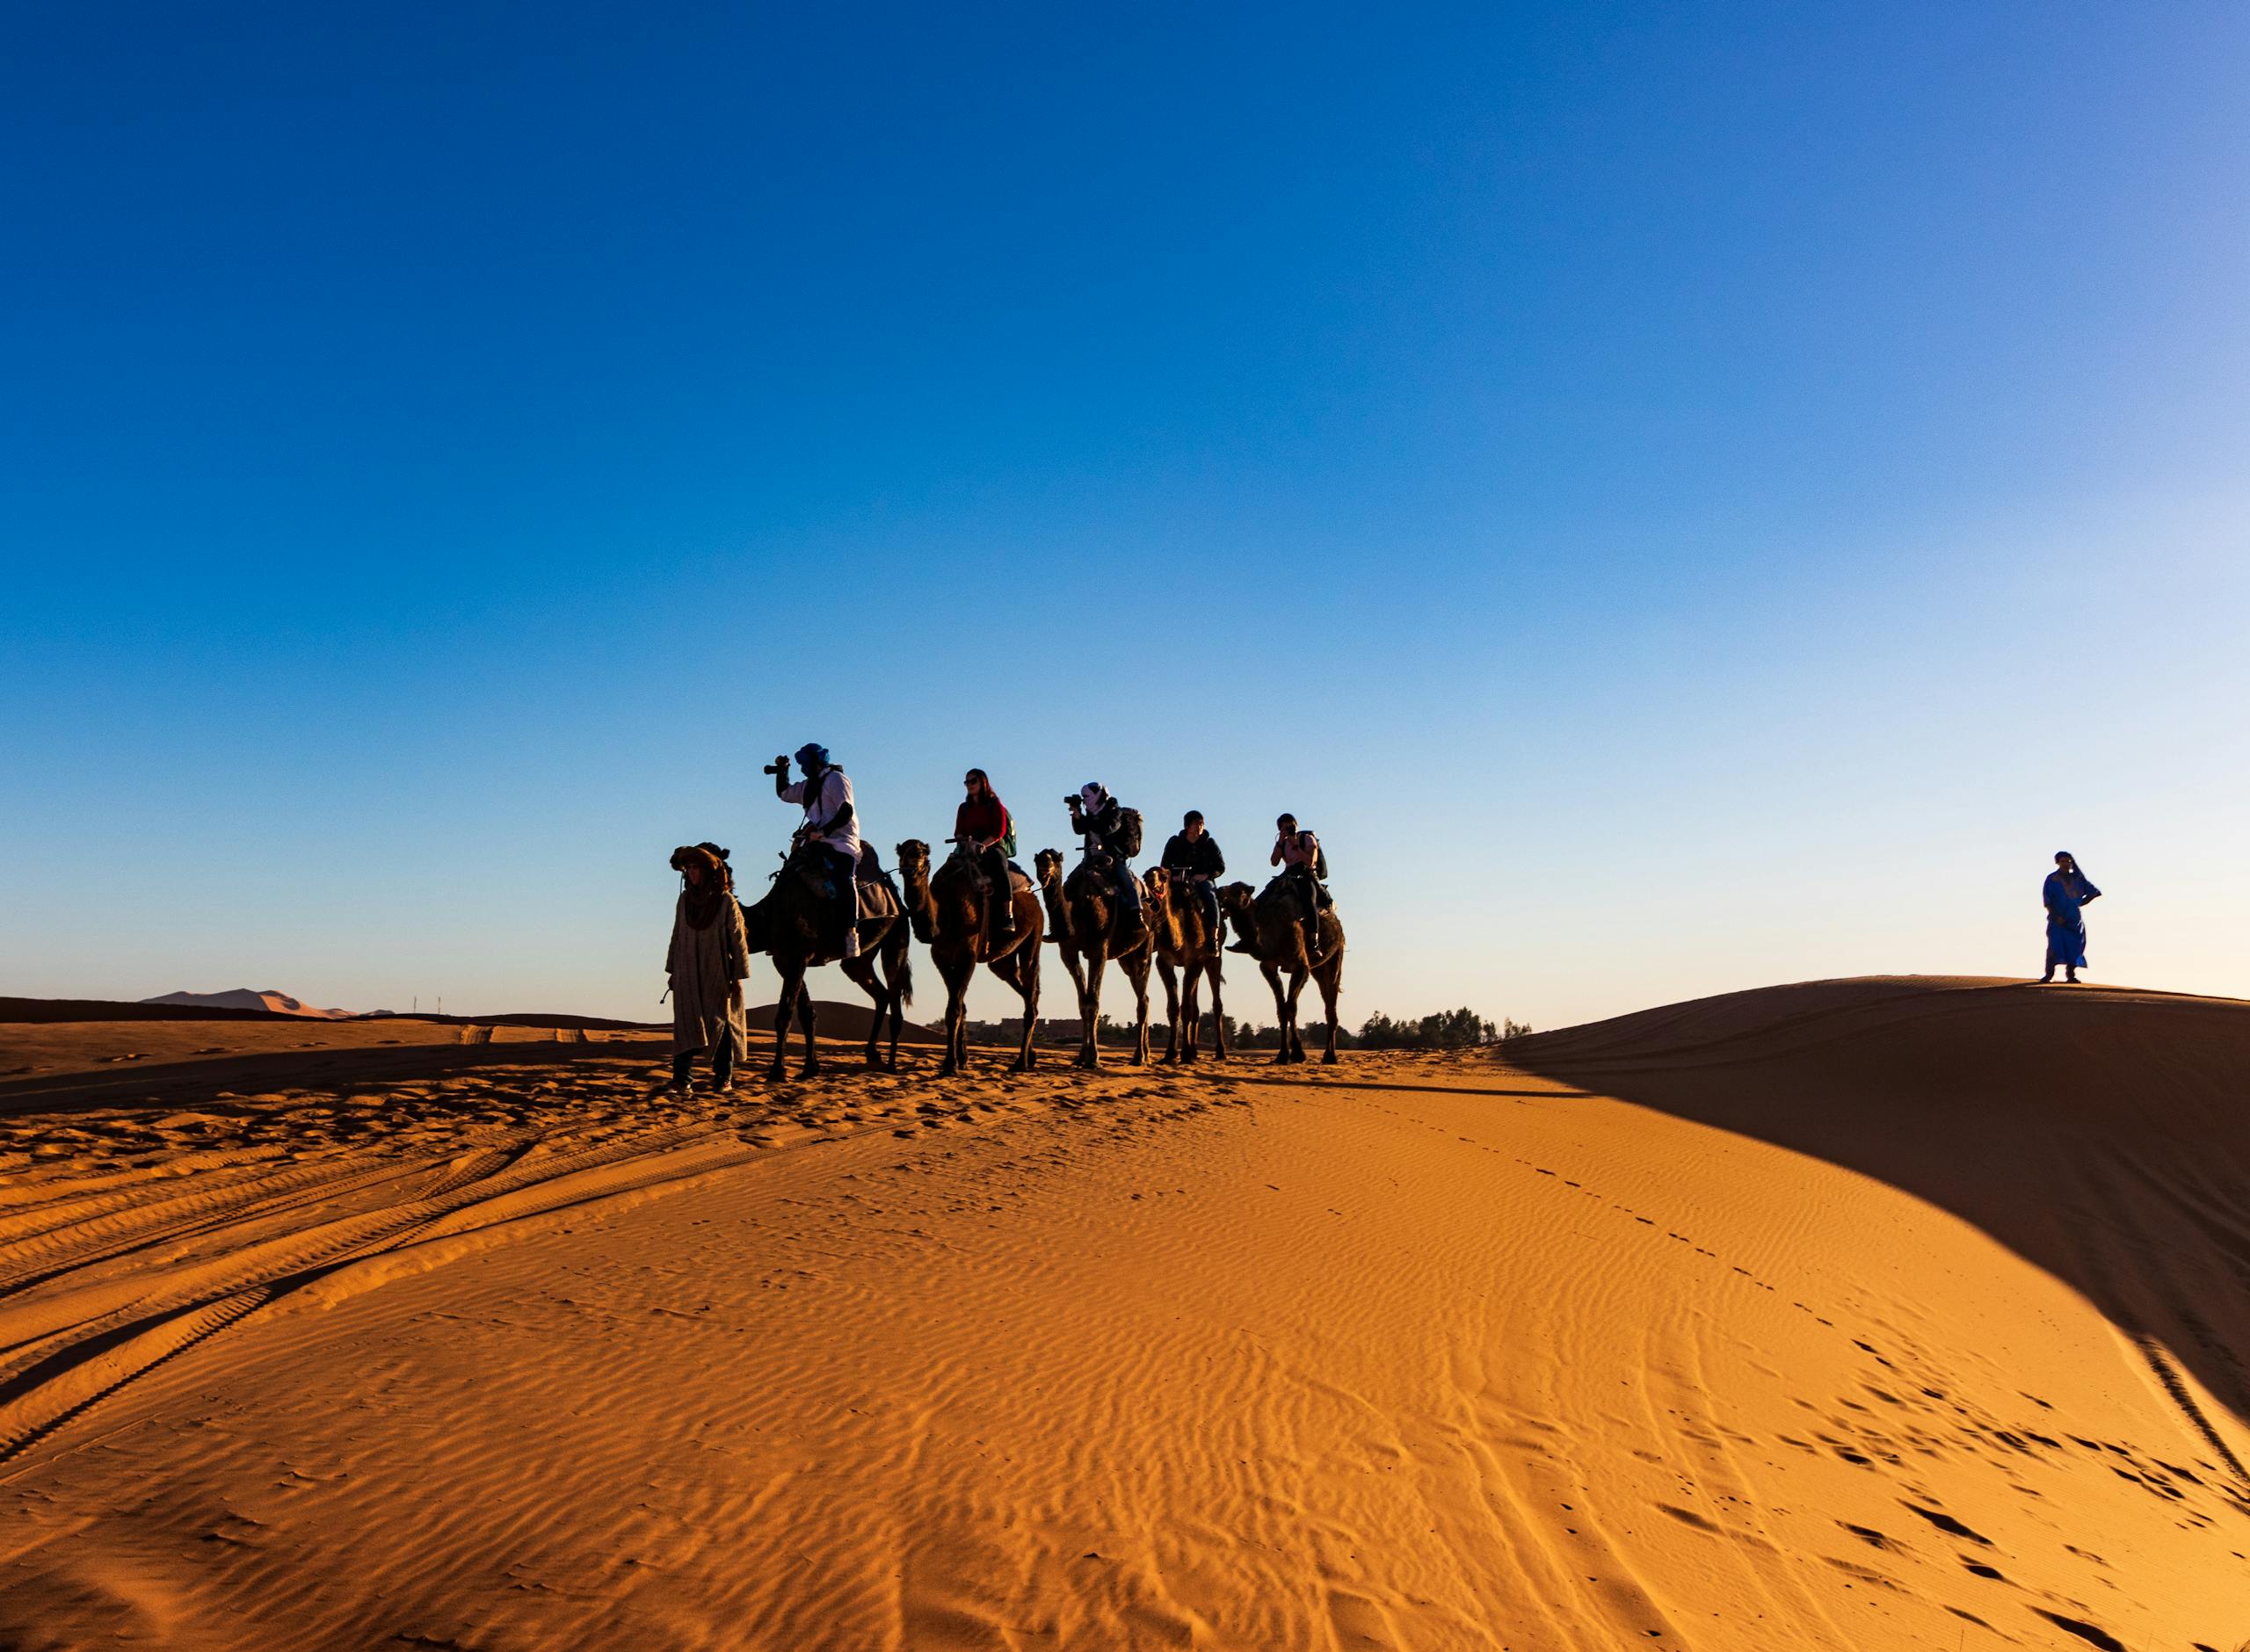 People Riding on Camels in gobi desert